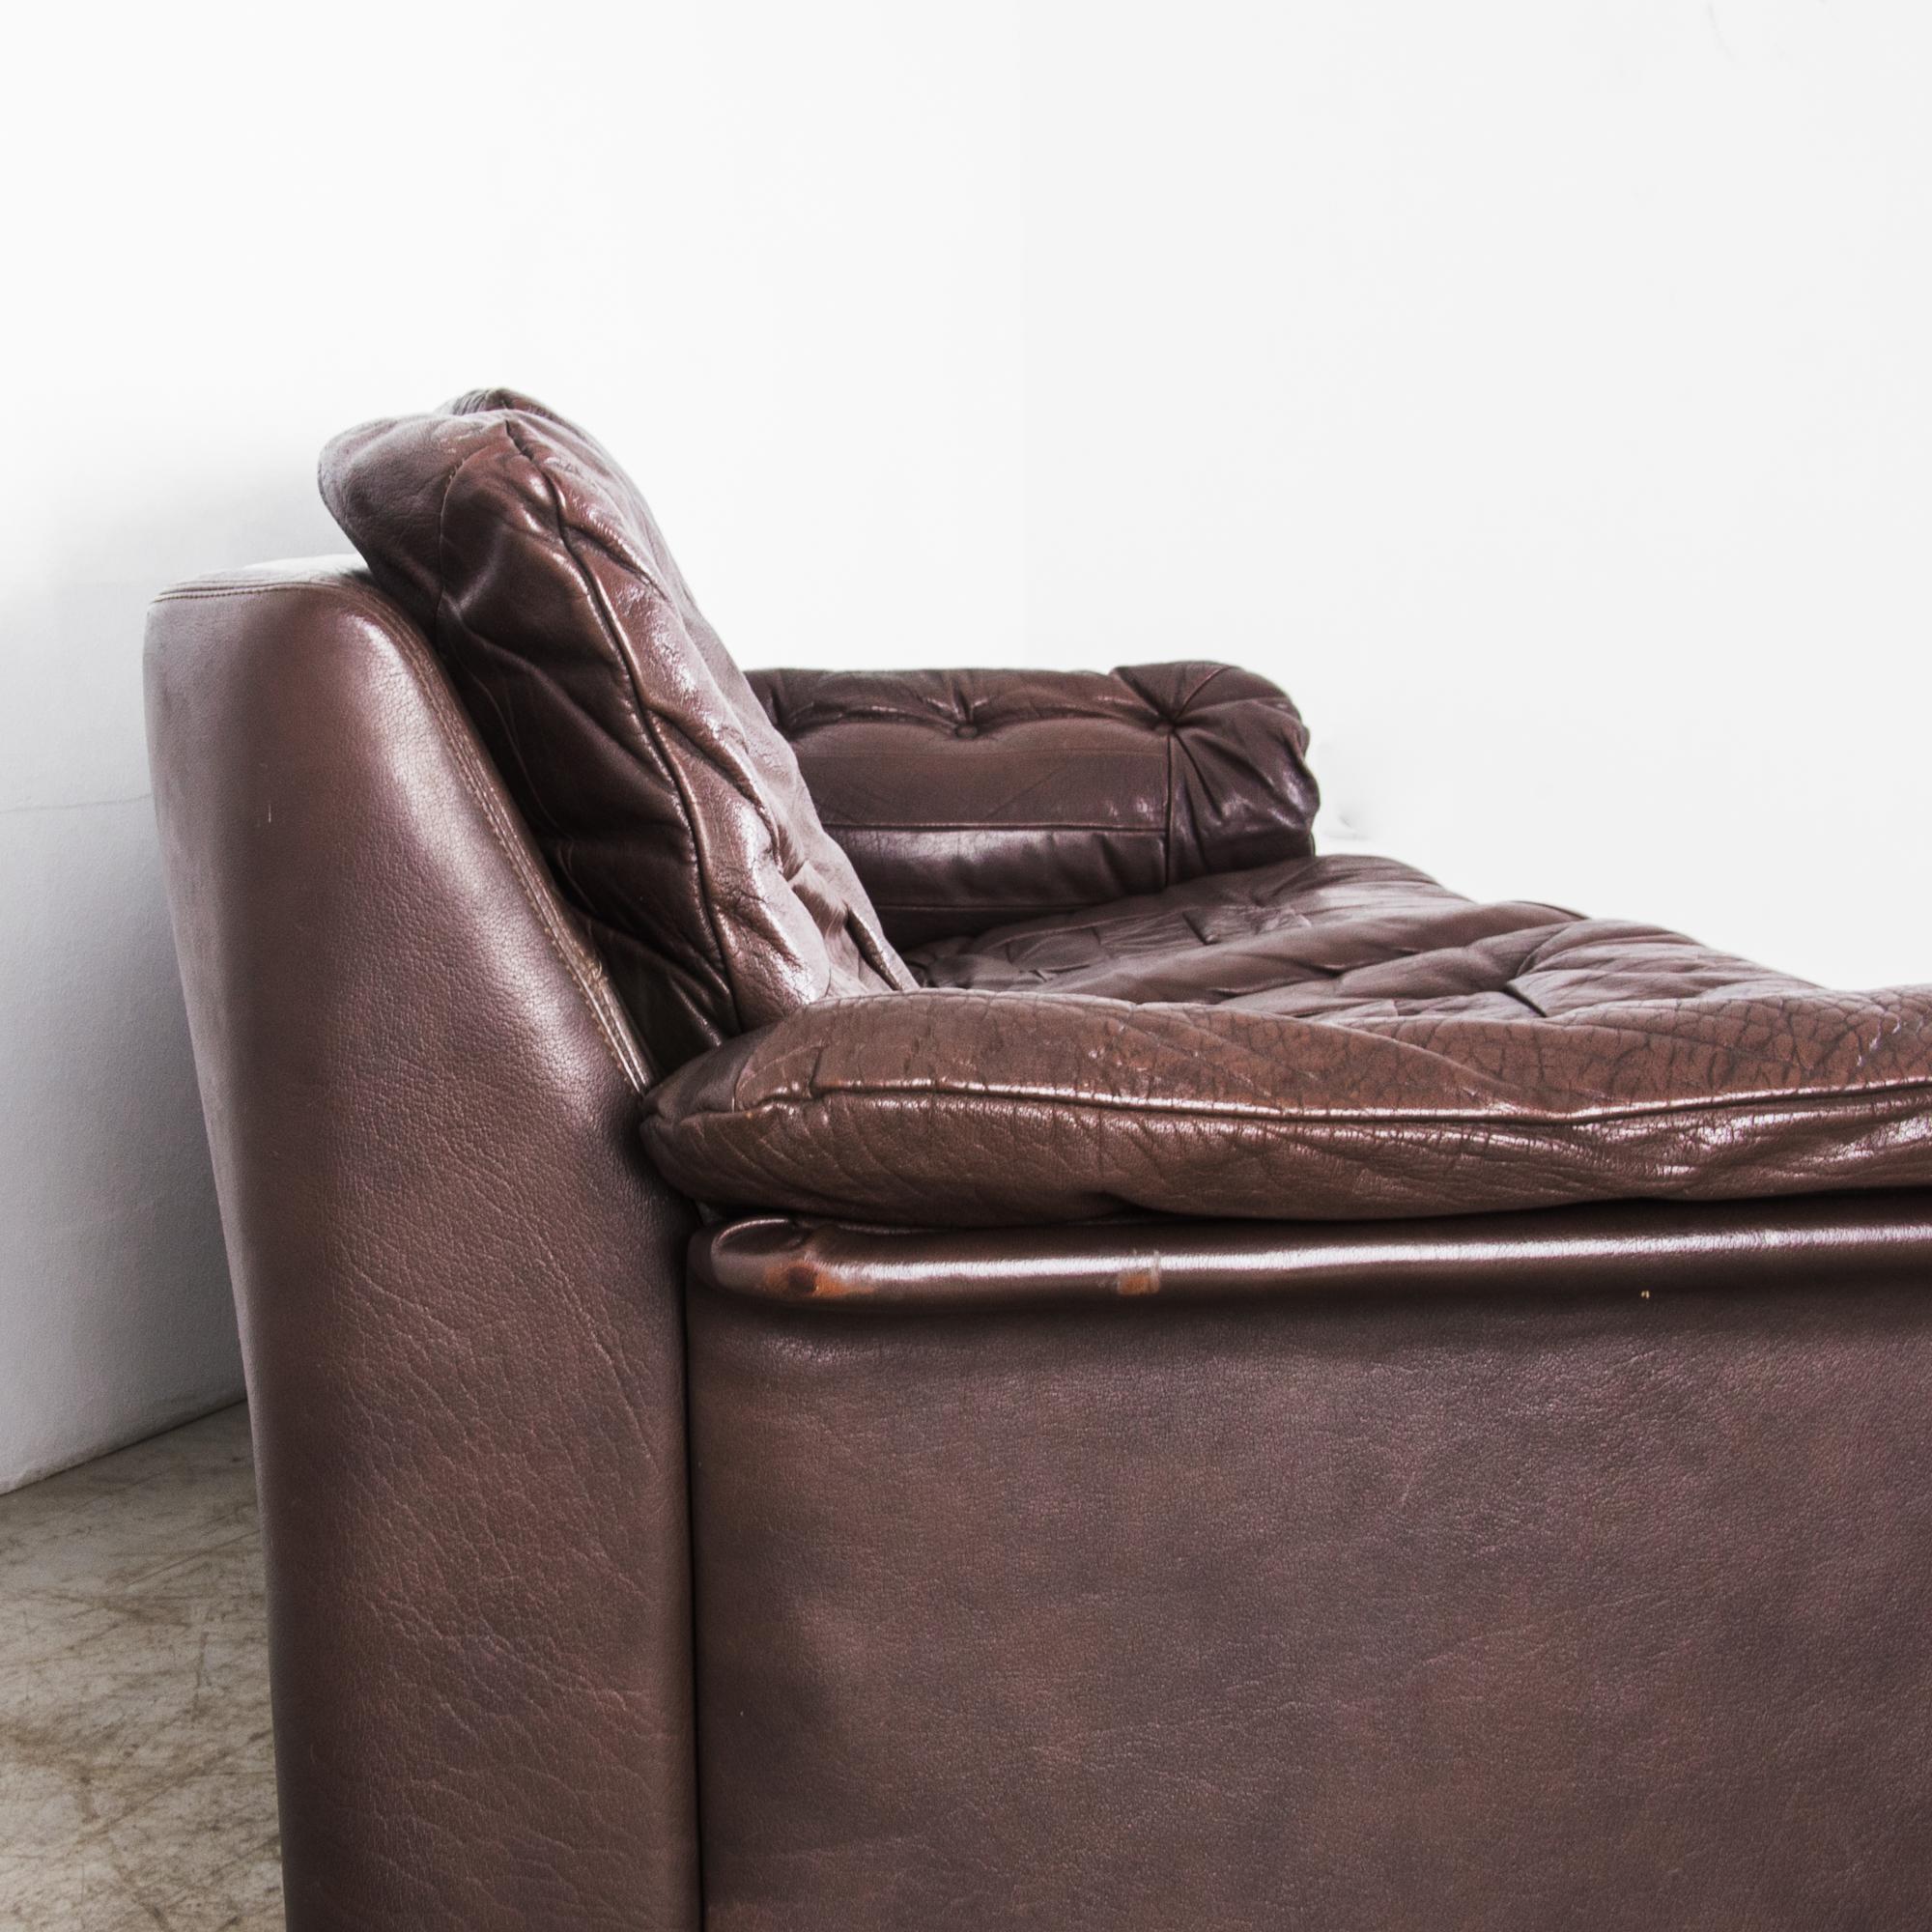 1970s Danish Modern Chocolate Brown Leather Sofa 2